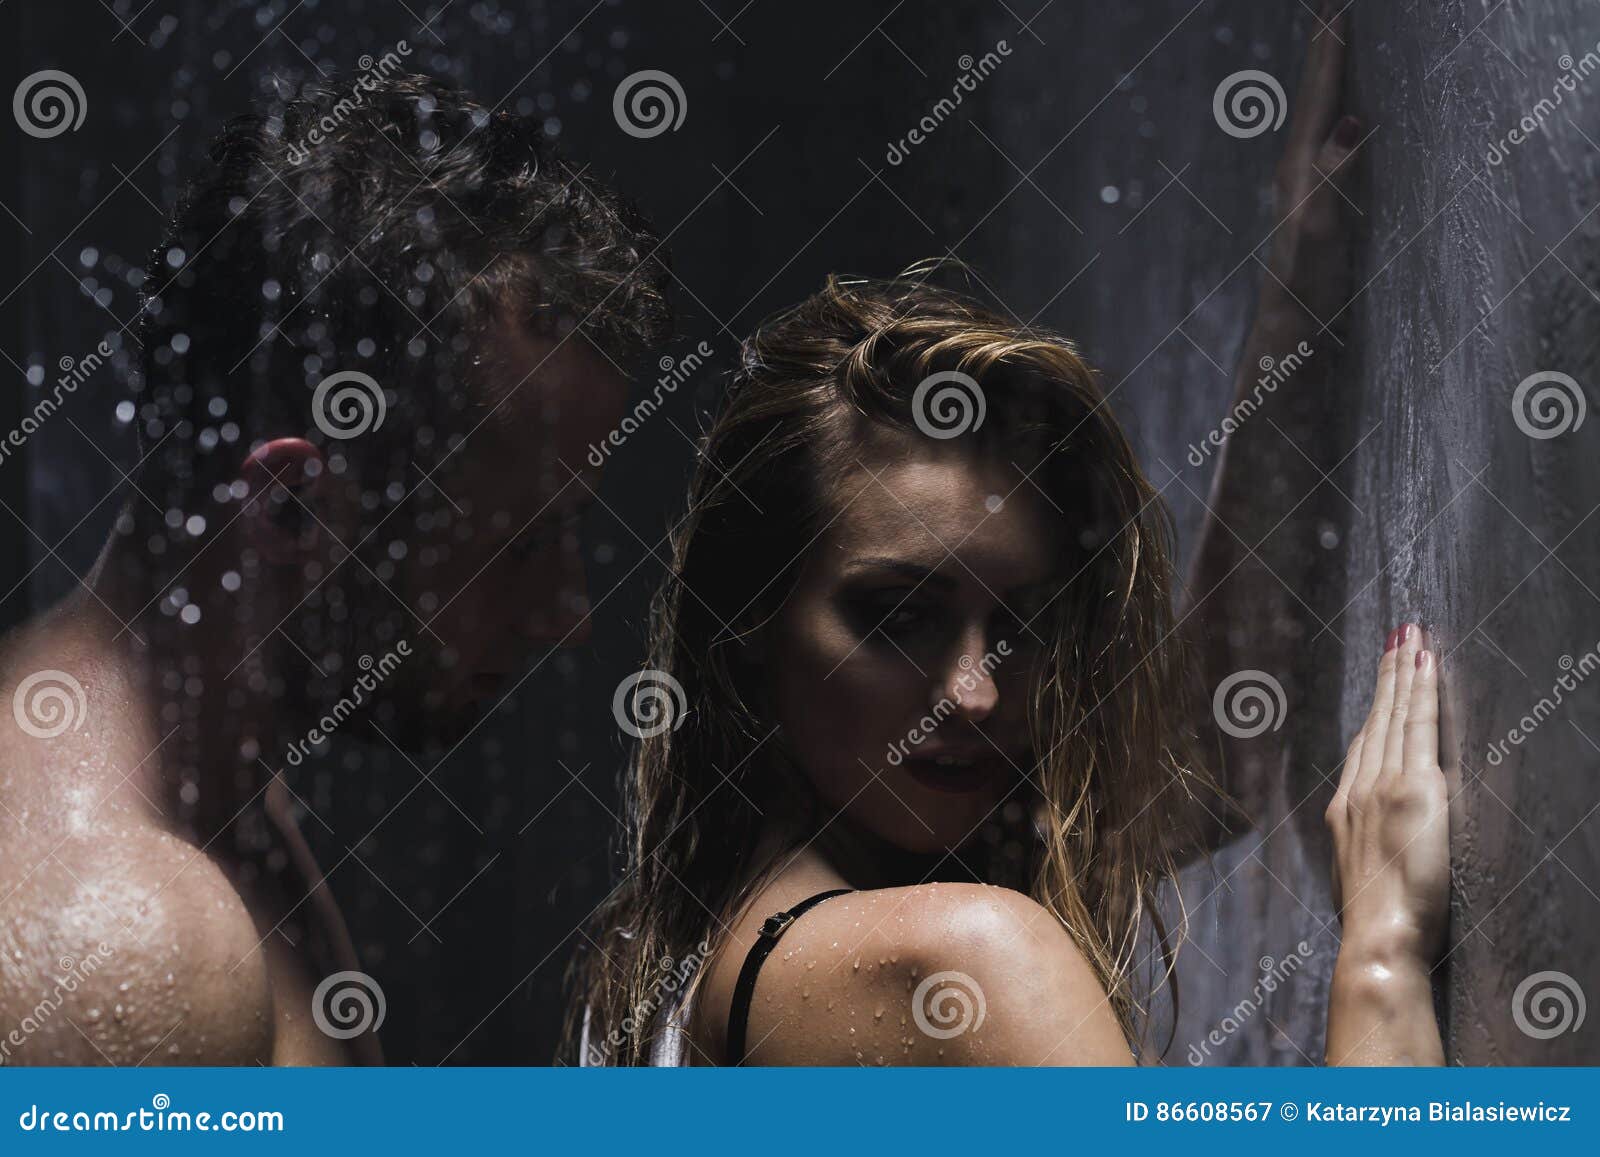 men having sex in the shower hd photo